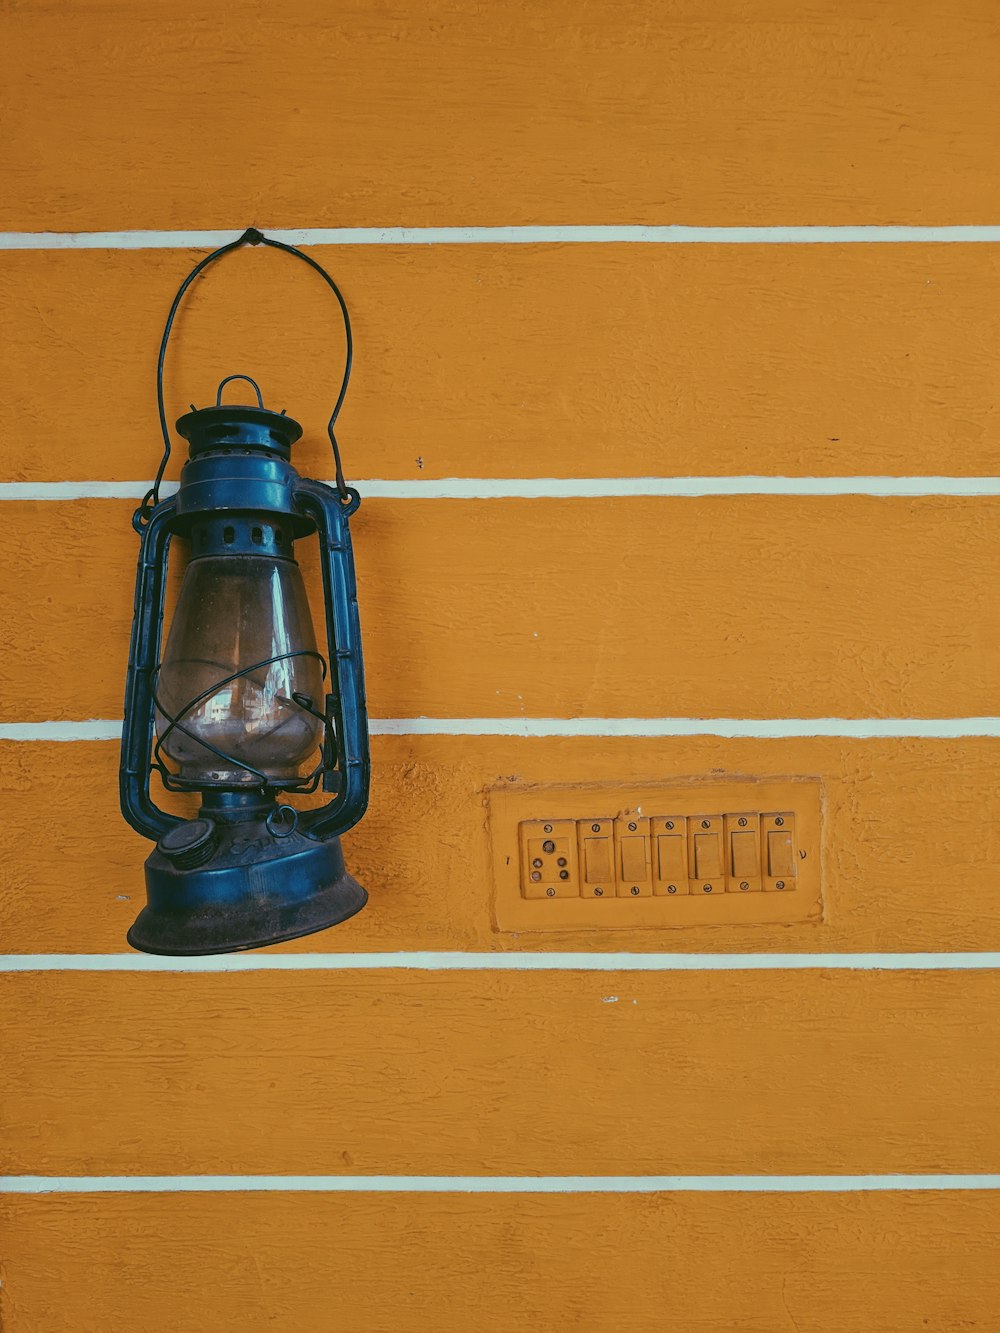 blue kerosene lantern on yellow and white striped wall